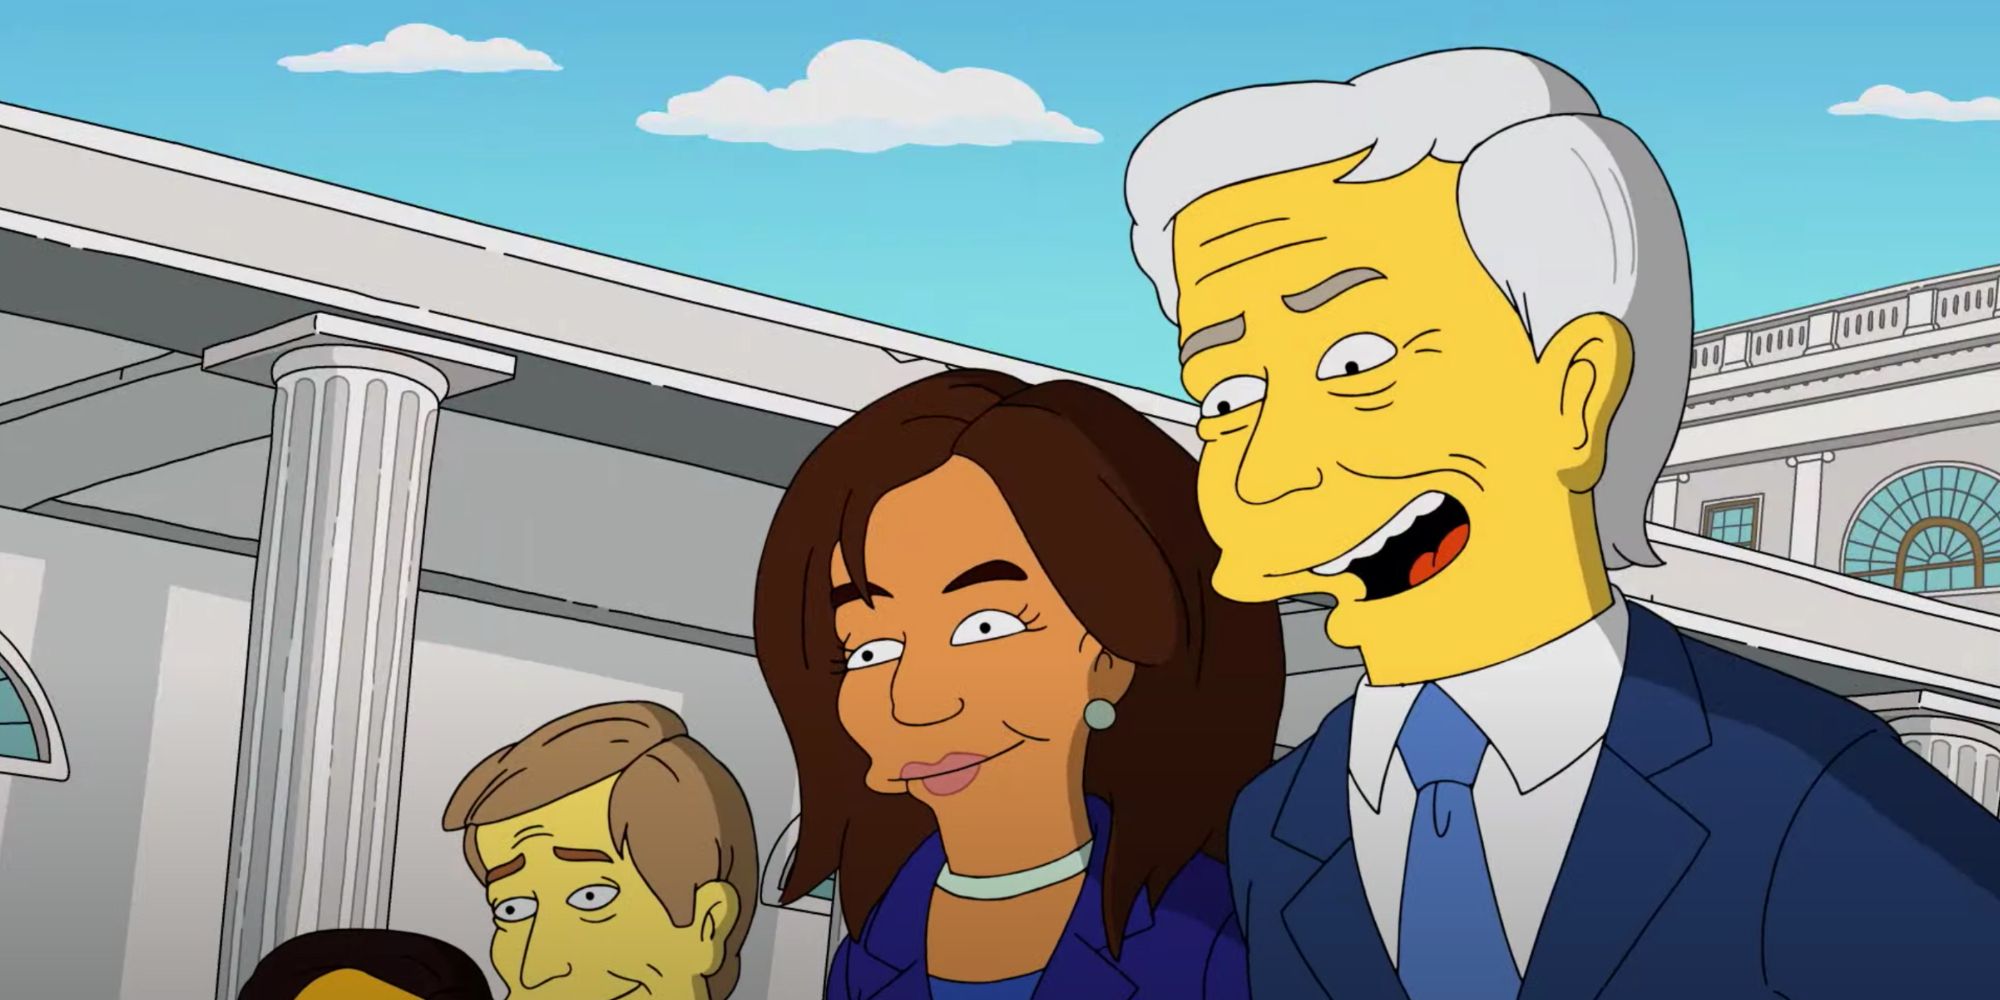 Kamala Harris standing next to Joe Biden in The Simpsons.